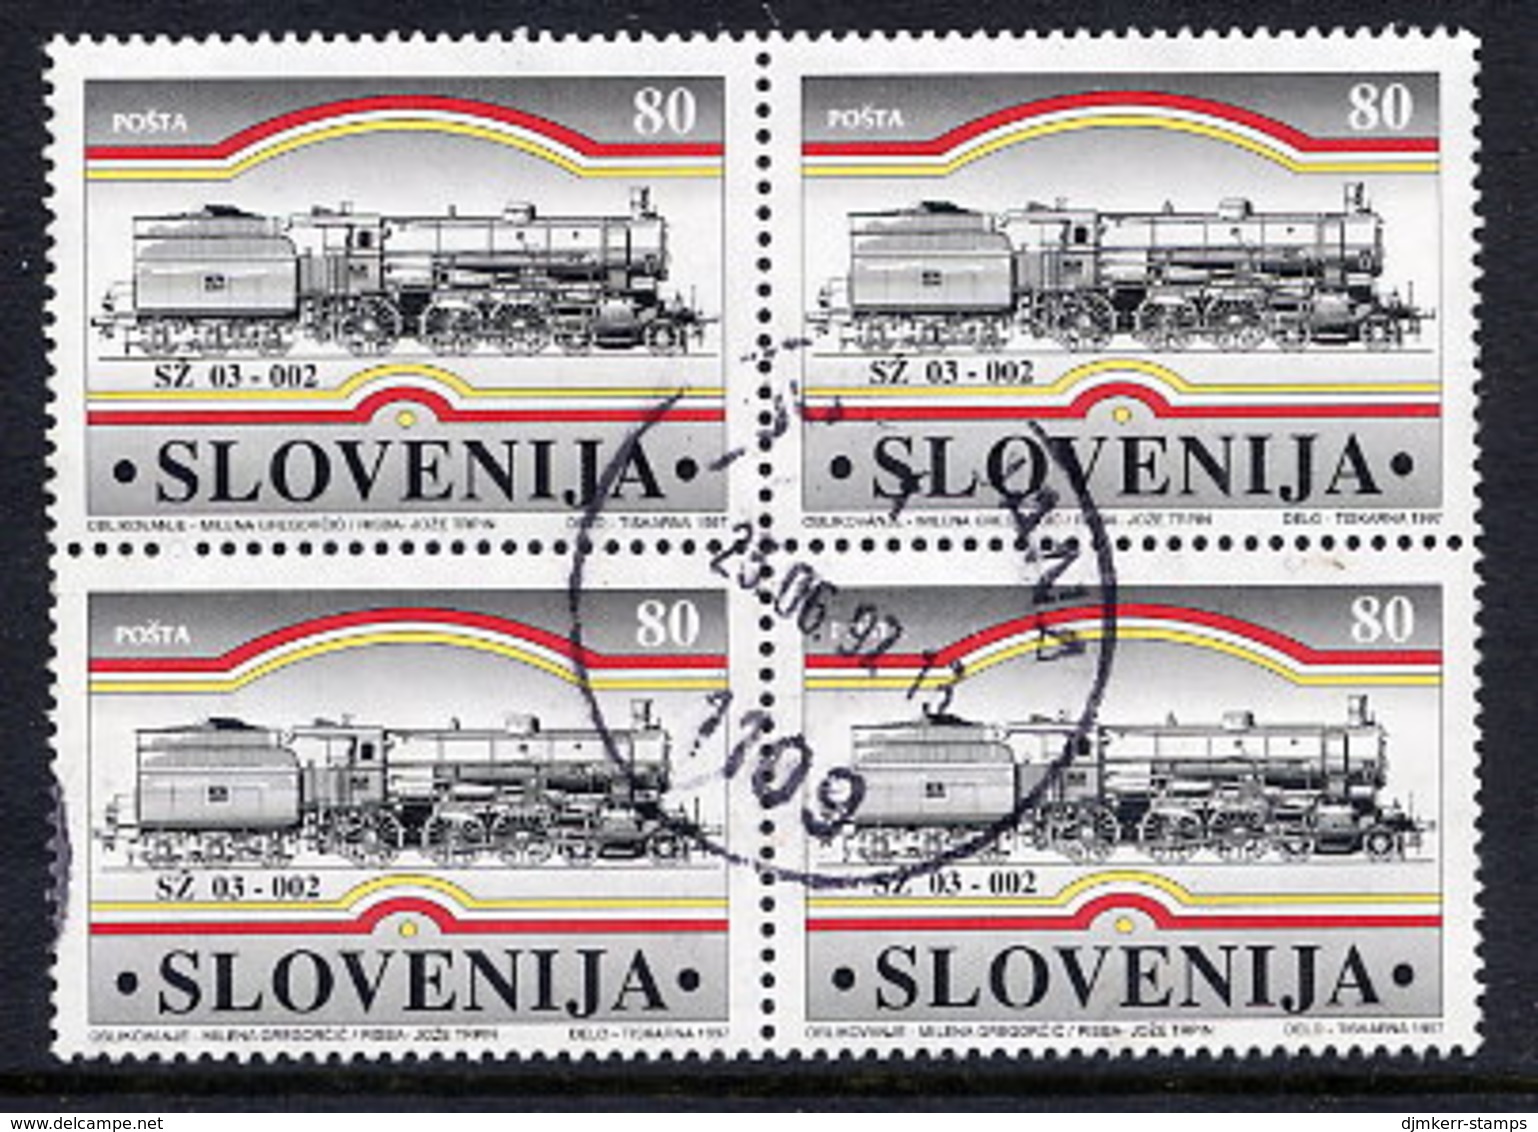 SLOVENIA 1997 Trieste Railway  Used Block Of 4.  Michel 188 - Slovénie